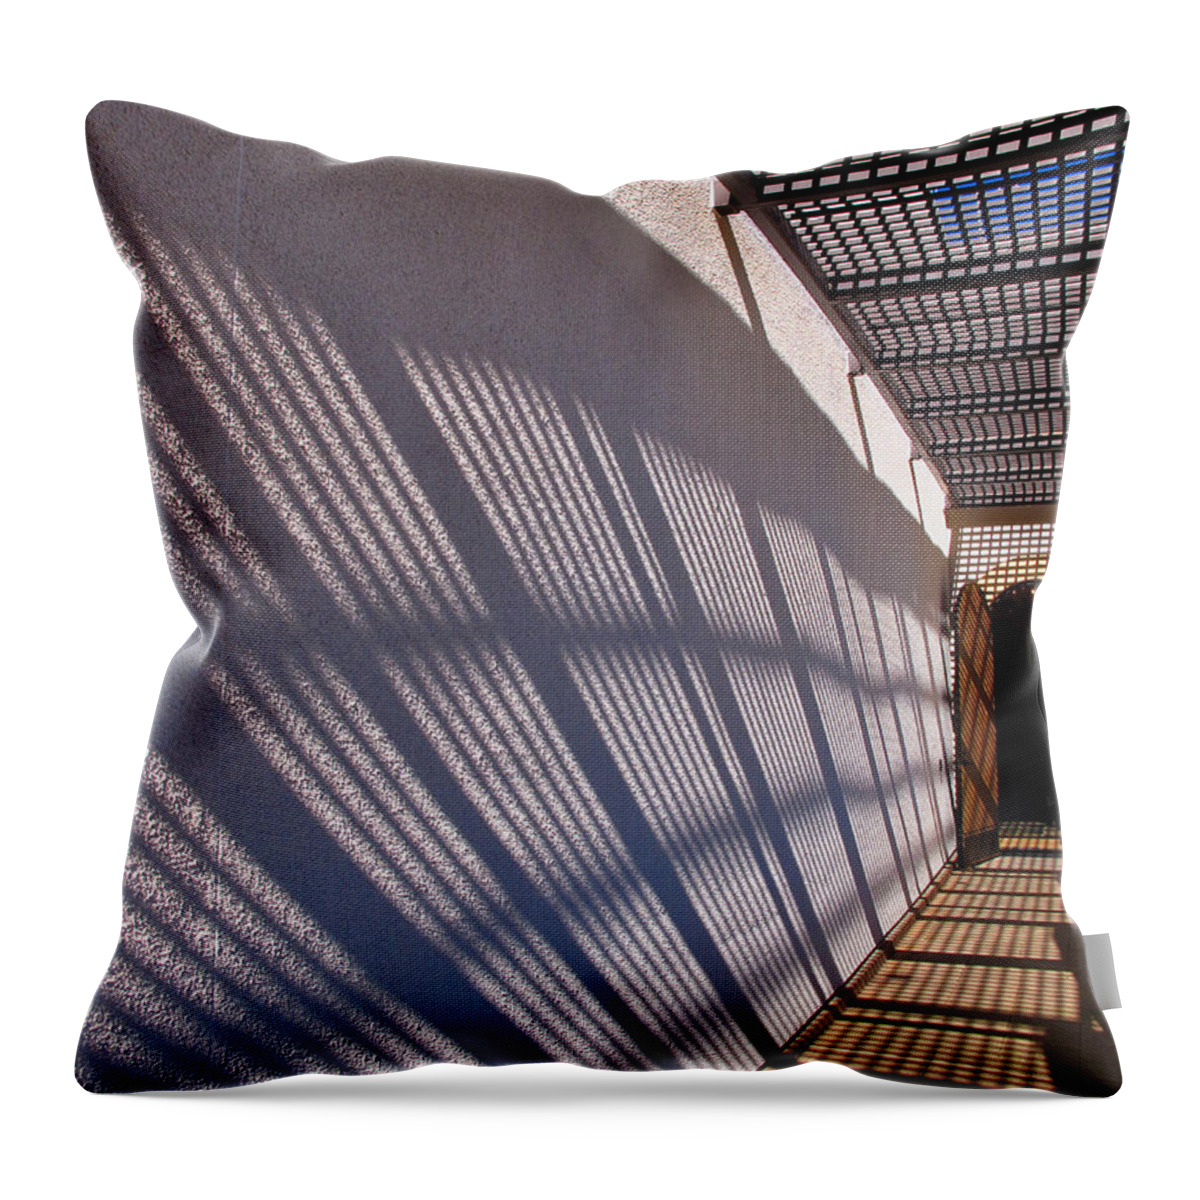 Shadows Throw Pillow featuring the photograph Lattice Shadows by Tom Gresham